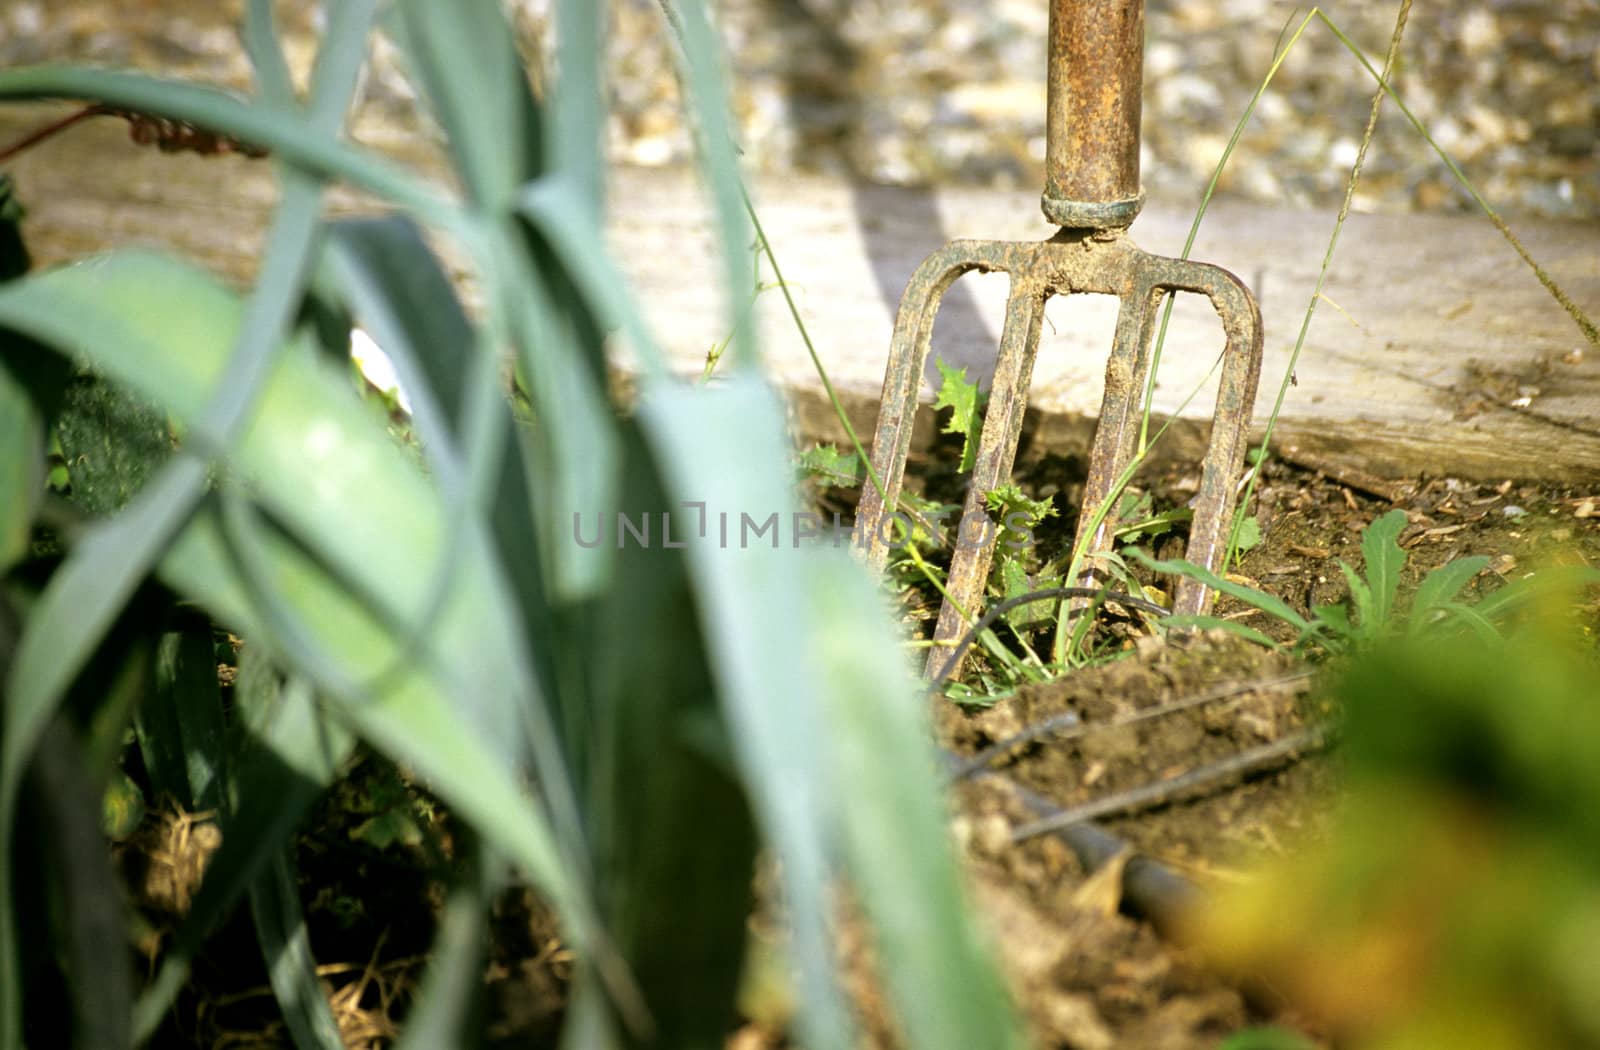 A pitchfork is abandoned in an organic garden after a hard days work weeding the leek beds.